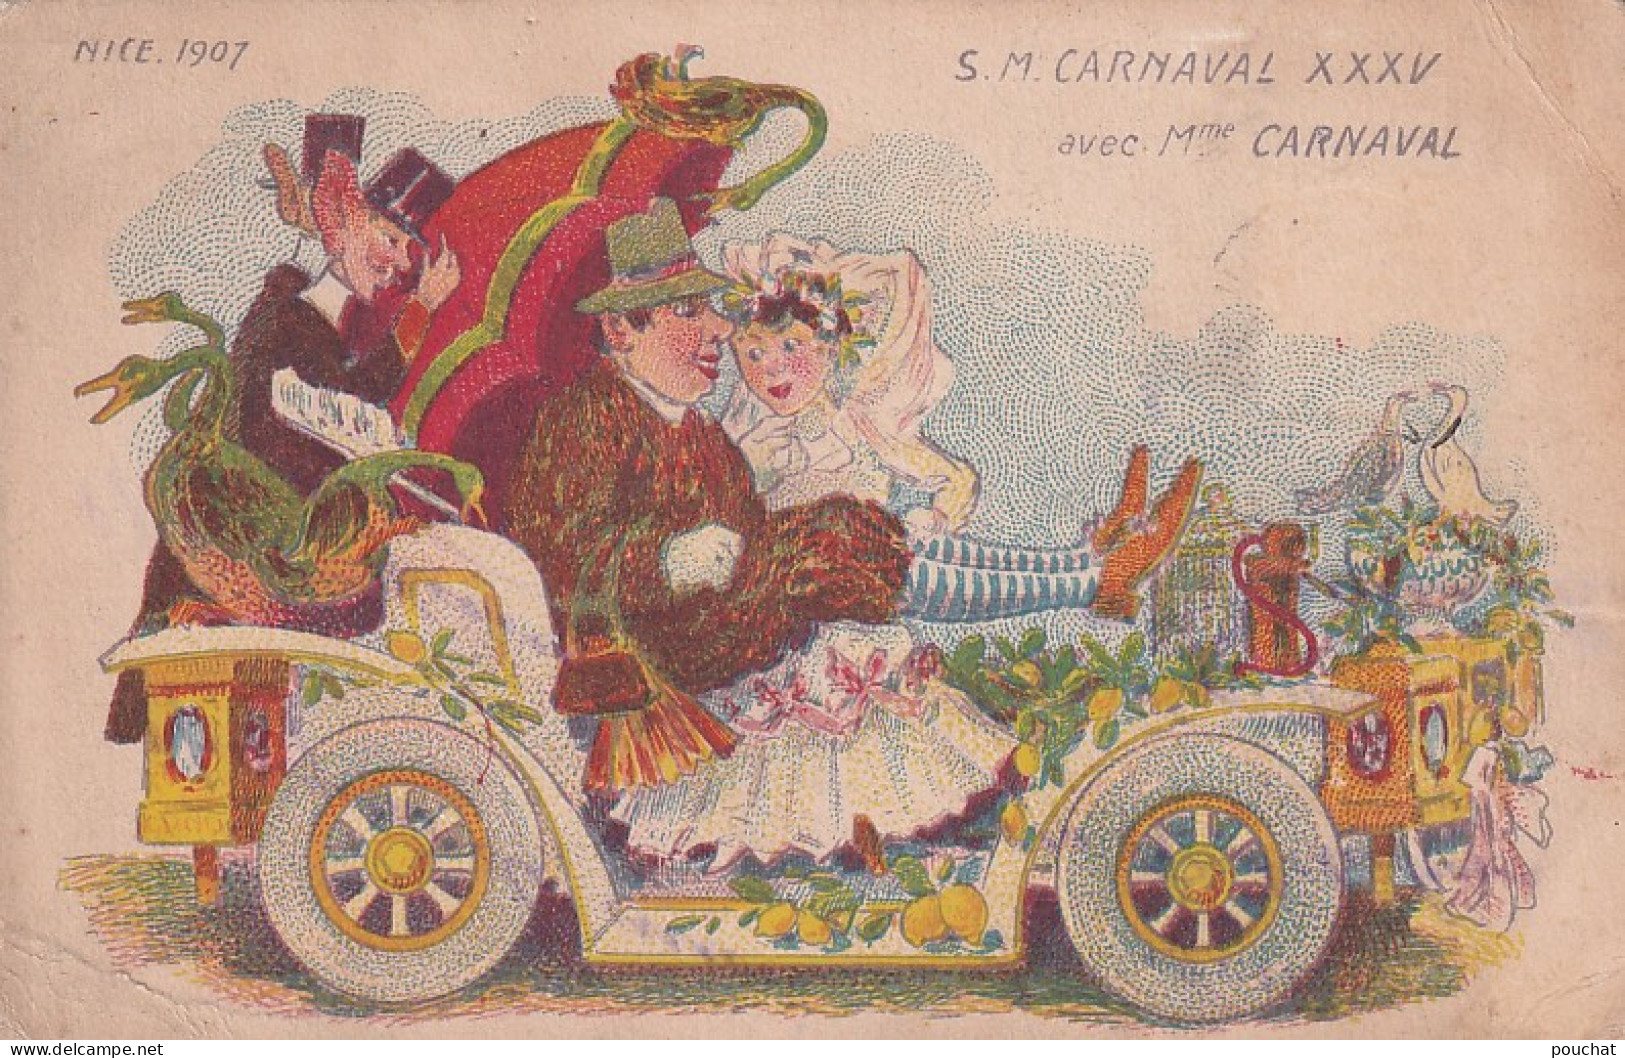 KO 27-(06) NICE 1907 - S. M. CARNAVAL XXXV AVEC Mme CARNAVAL - ILLUSTRATEUR - Carnaval